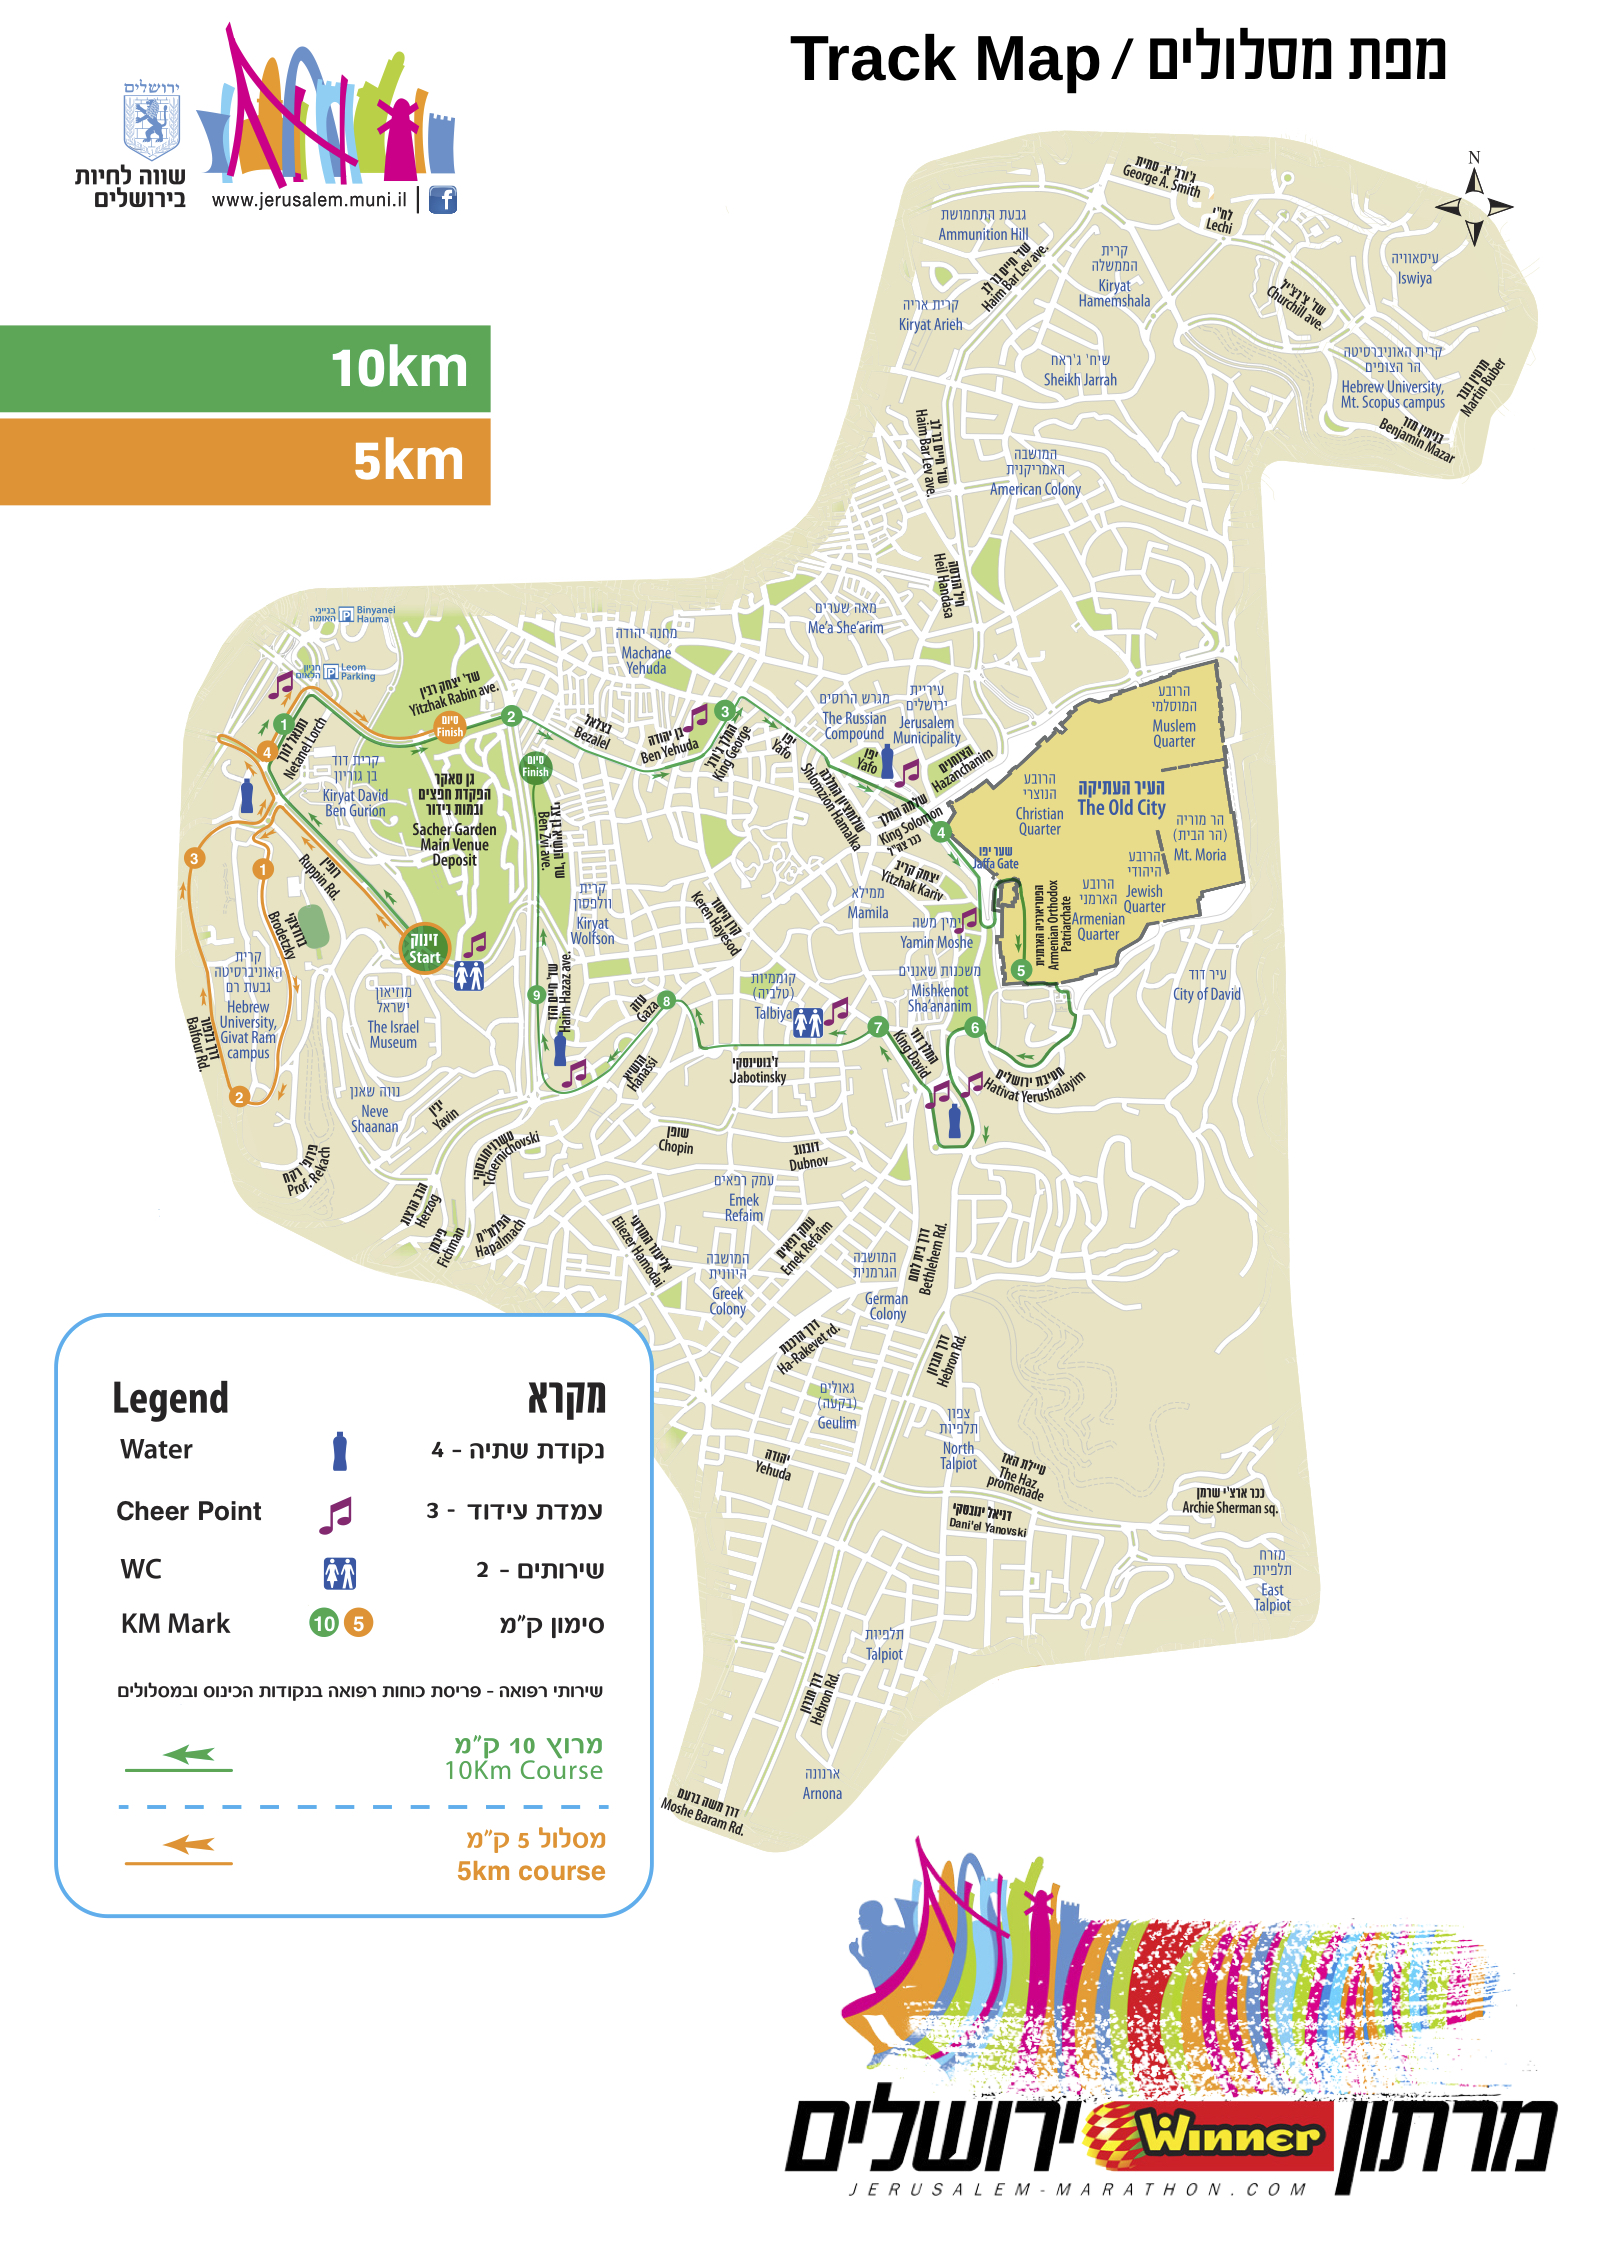 Jerusalem marathon 2019 map